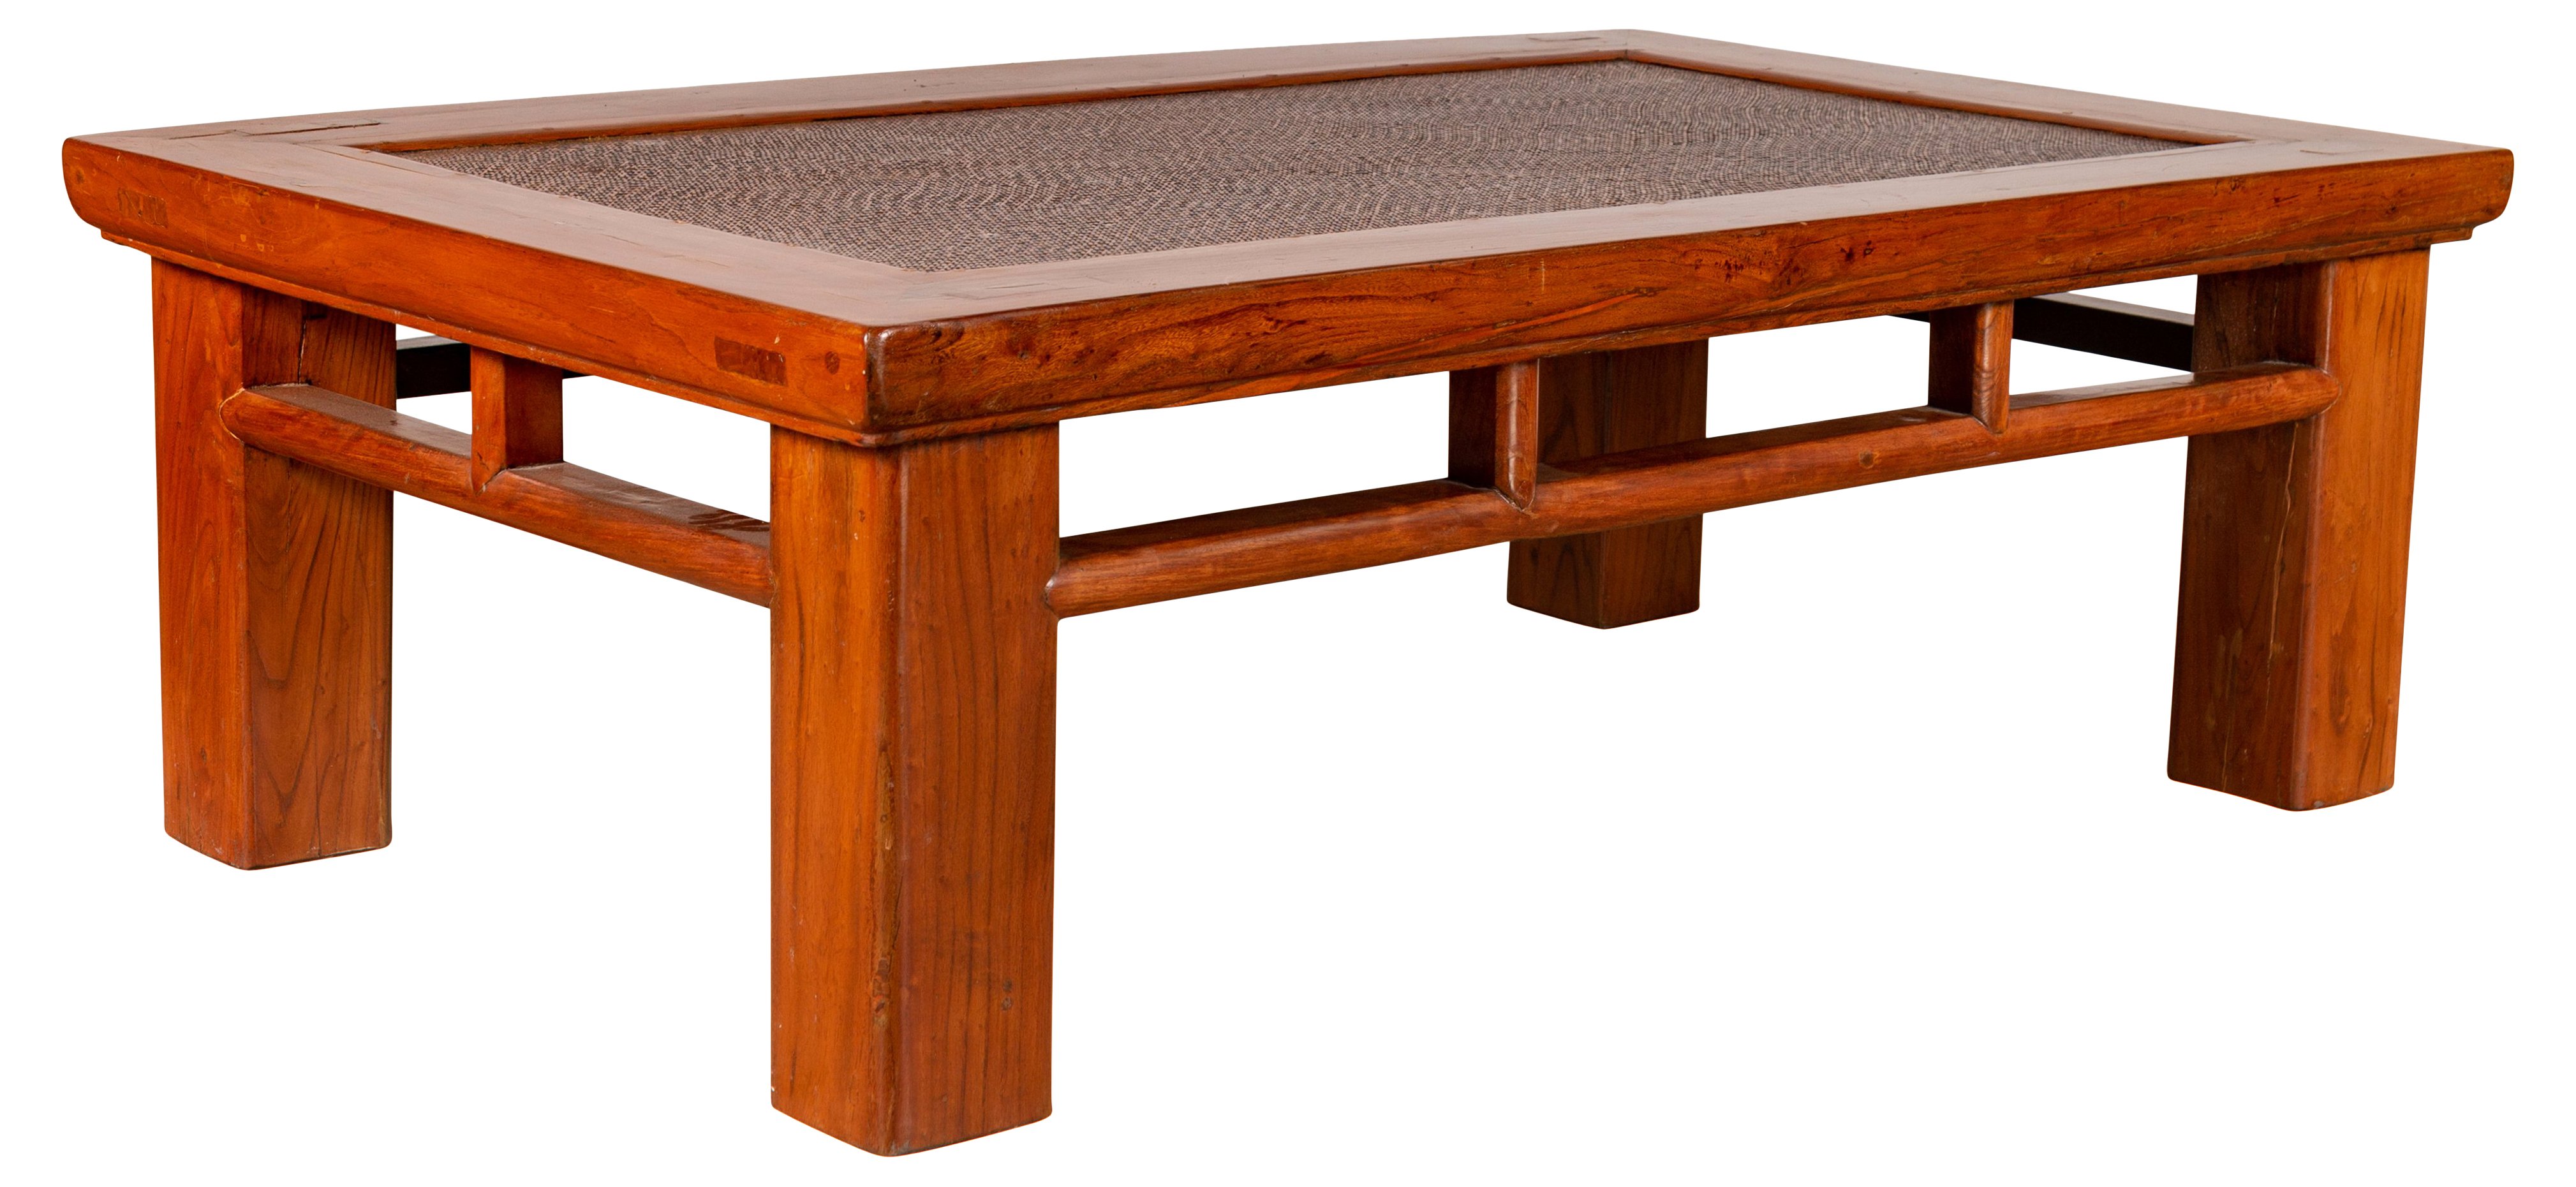 Chinese Square Leg Elm Coffee Table~P77555984